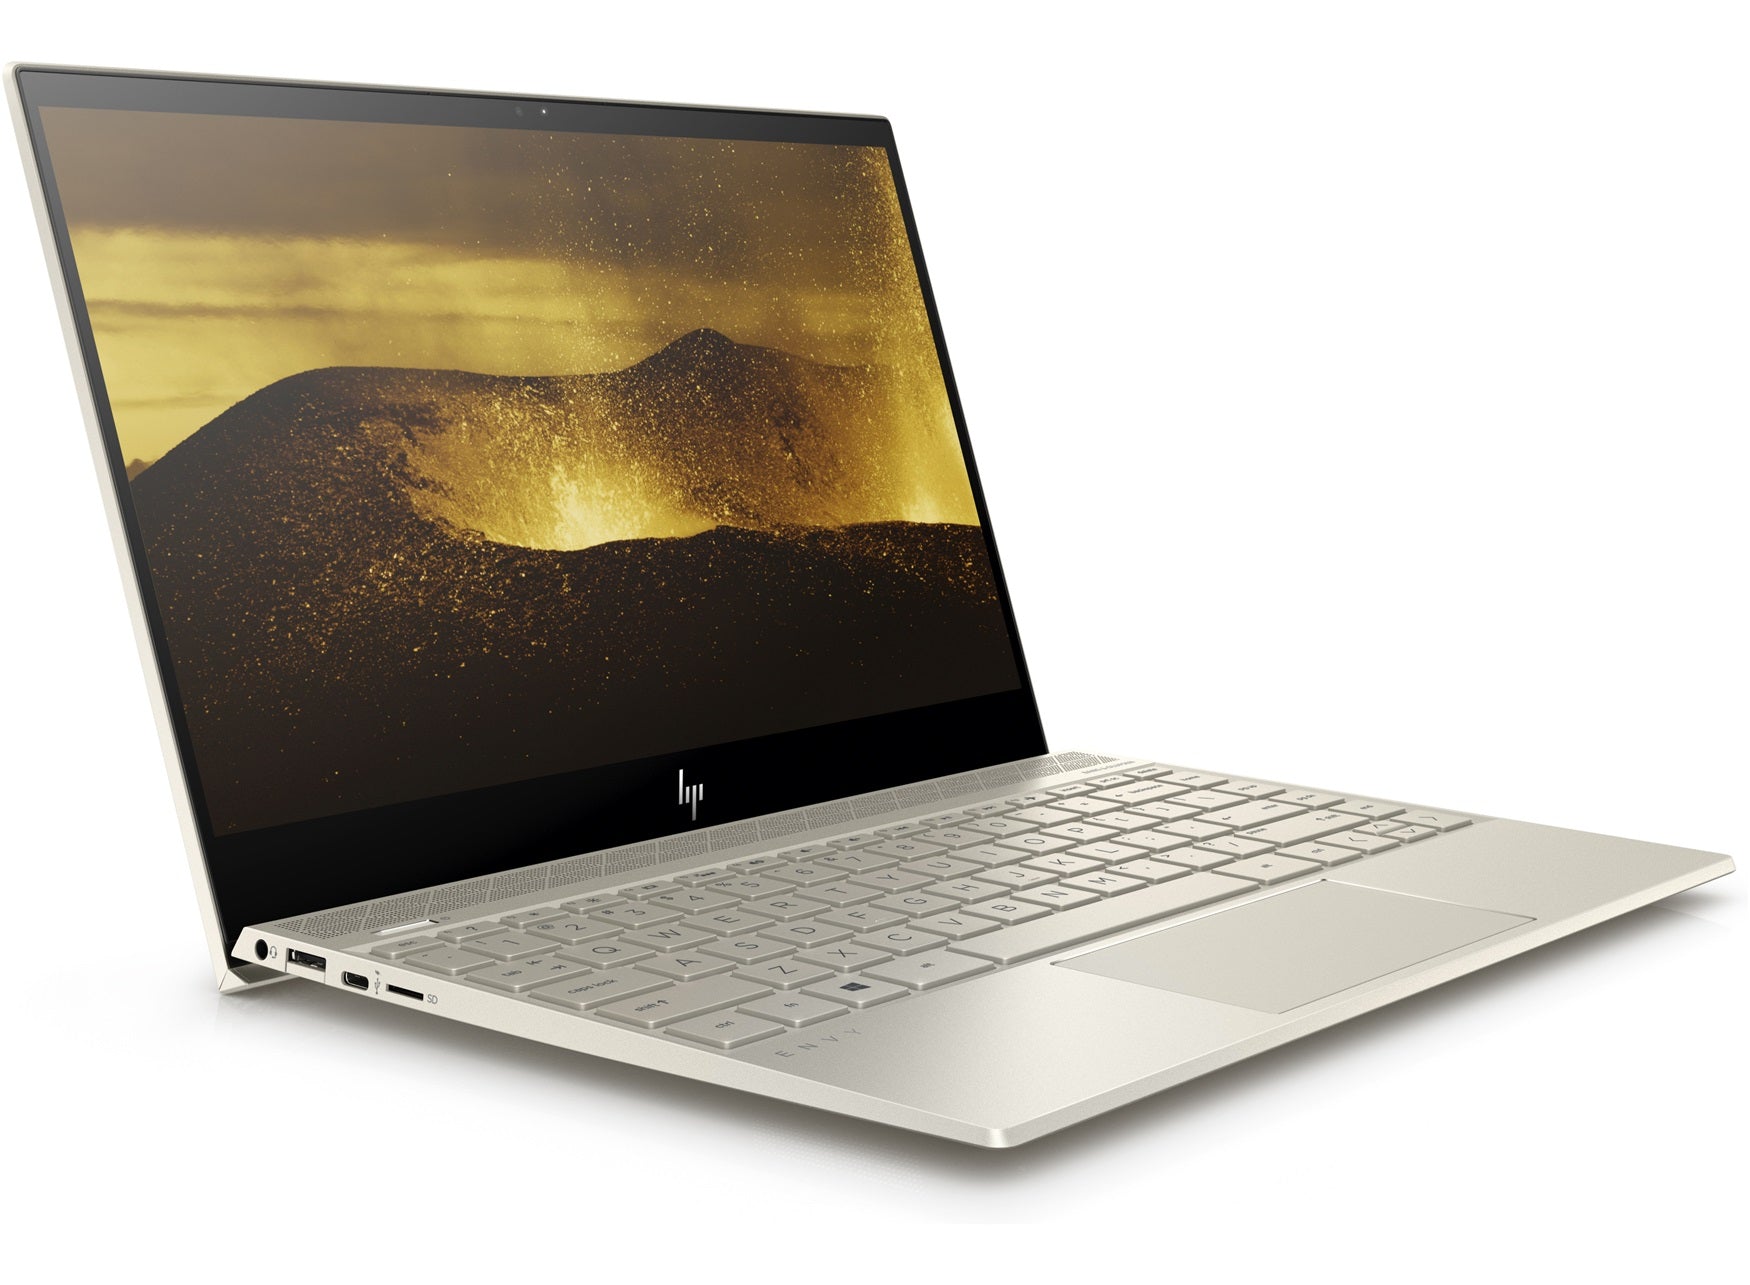 HP Envy 13 13.3" UHD Notebook PC Core i7-8550U 8GB 256GB SSD Gold – The Digital Source LLC